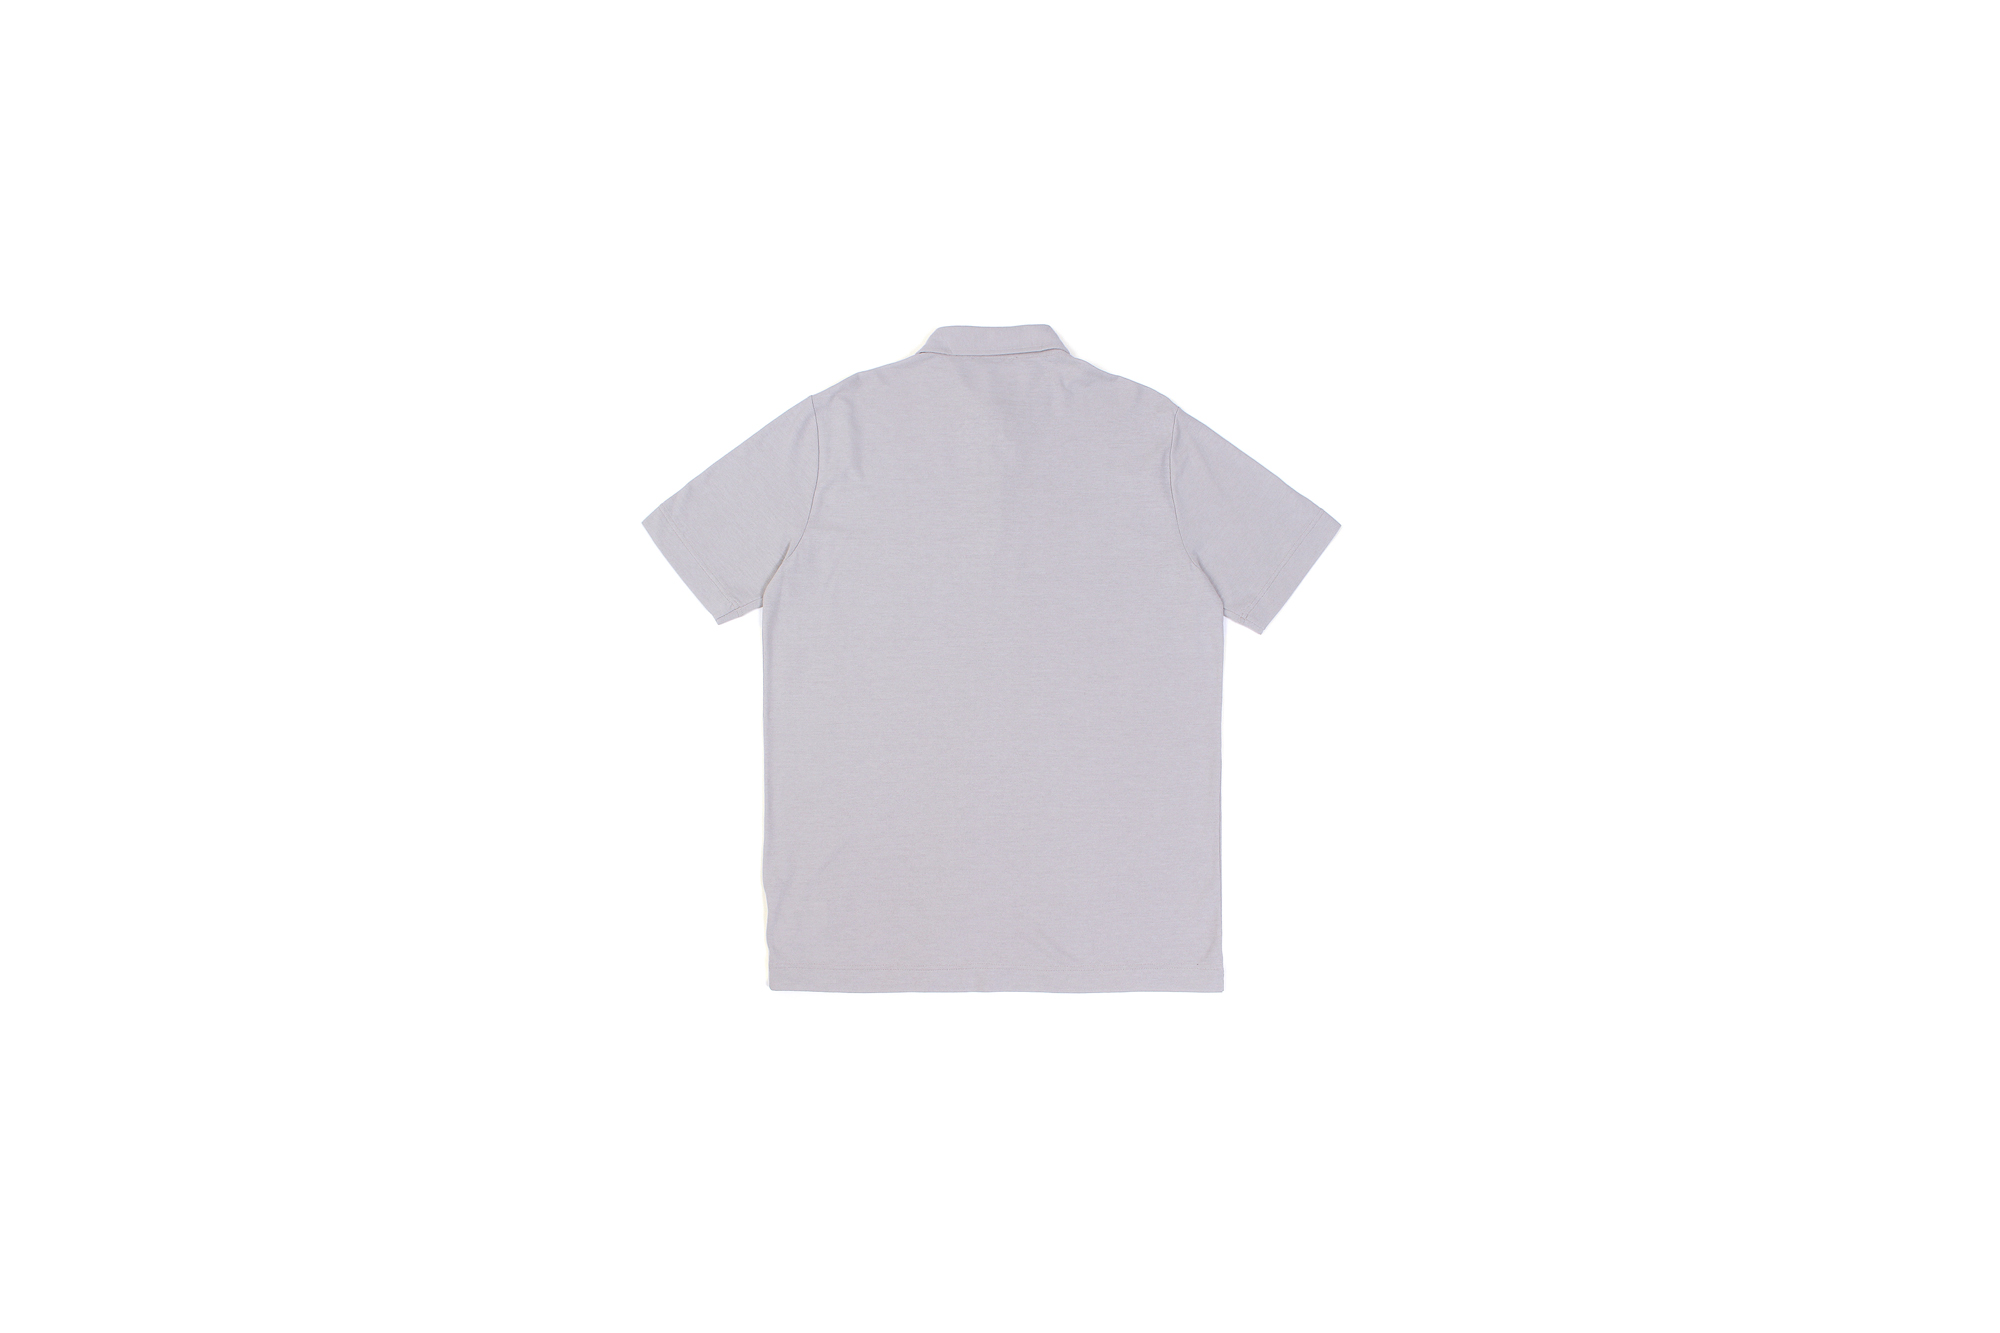 ZANONE (ザノーネ) Polo Shirt ice cotton アイスコットン ポロシャツ GREGE (グレージュ・Z5252) made in italy (イタリア製) 2021 春夏新作 愛知 名古屋 Alto e Diritto altoediritto アルトエデリット